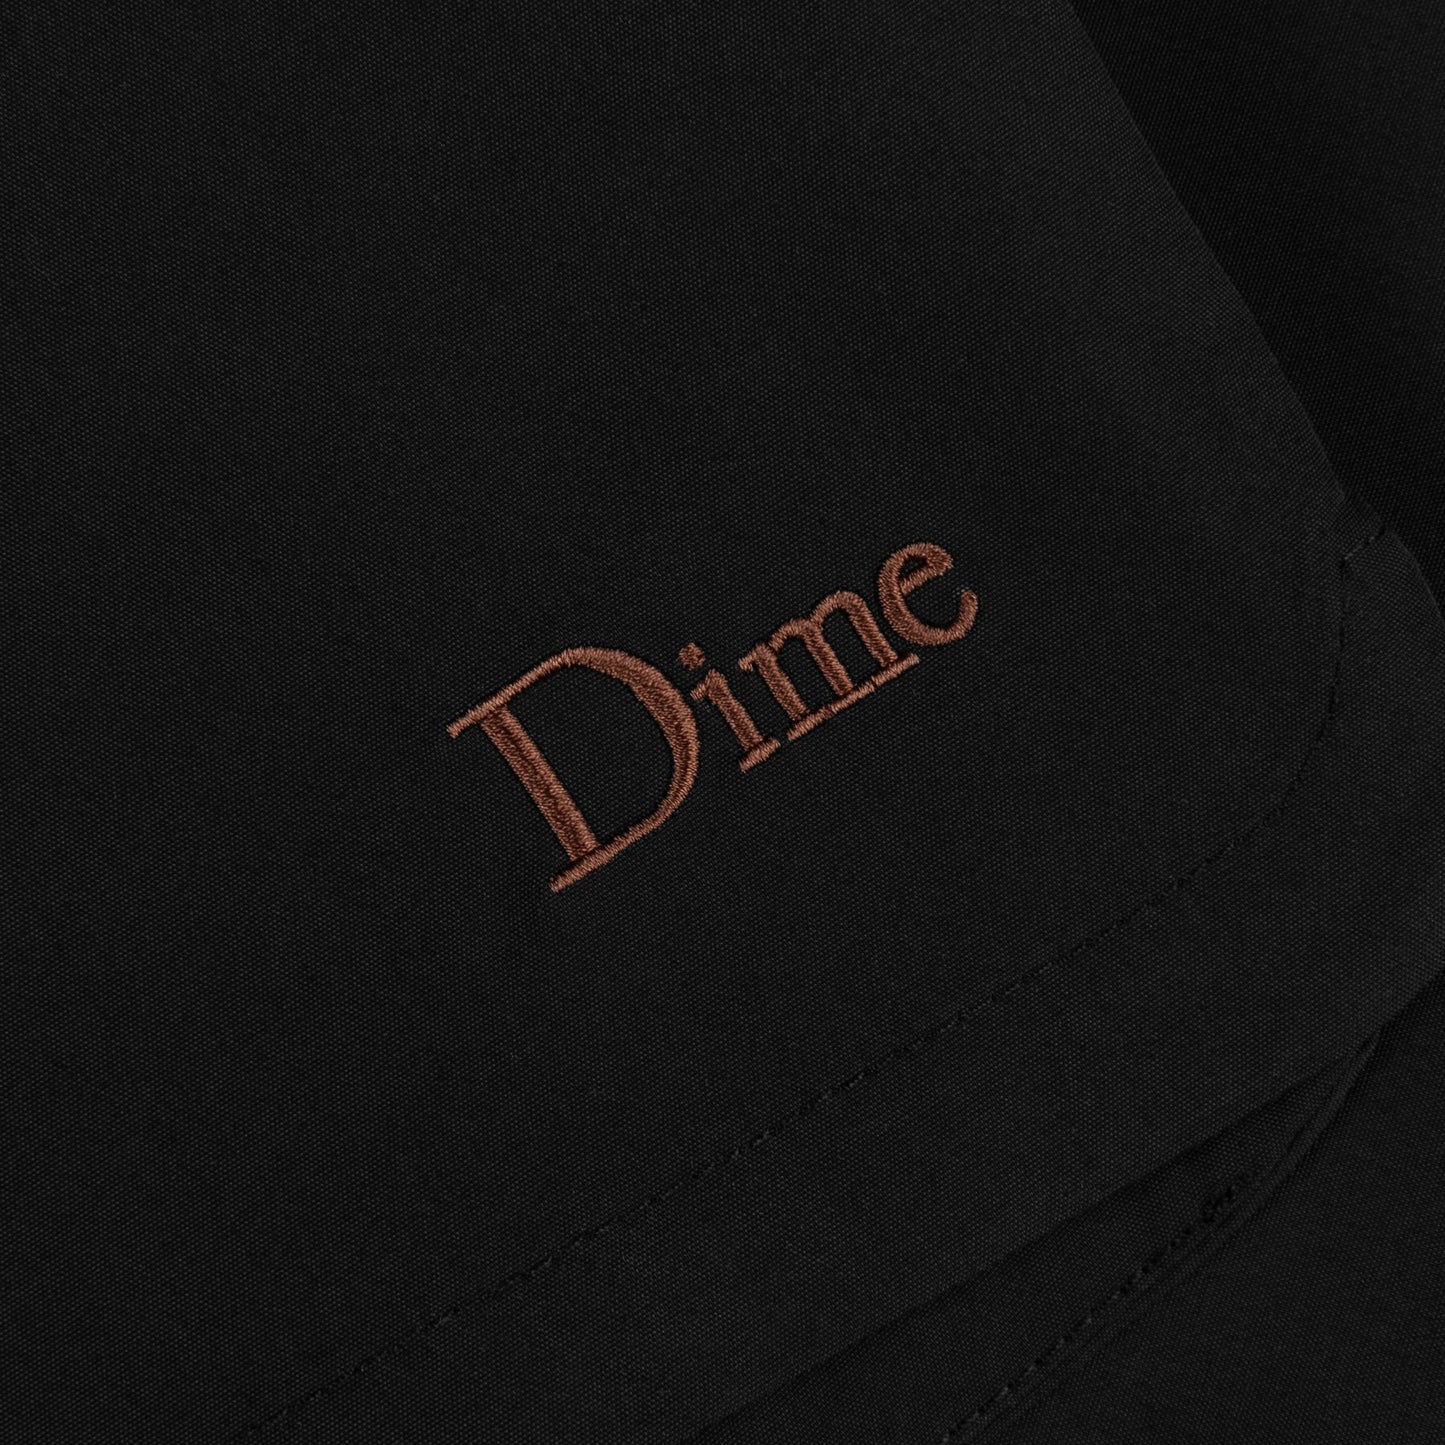 Dime Classic Shorts: Black